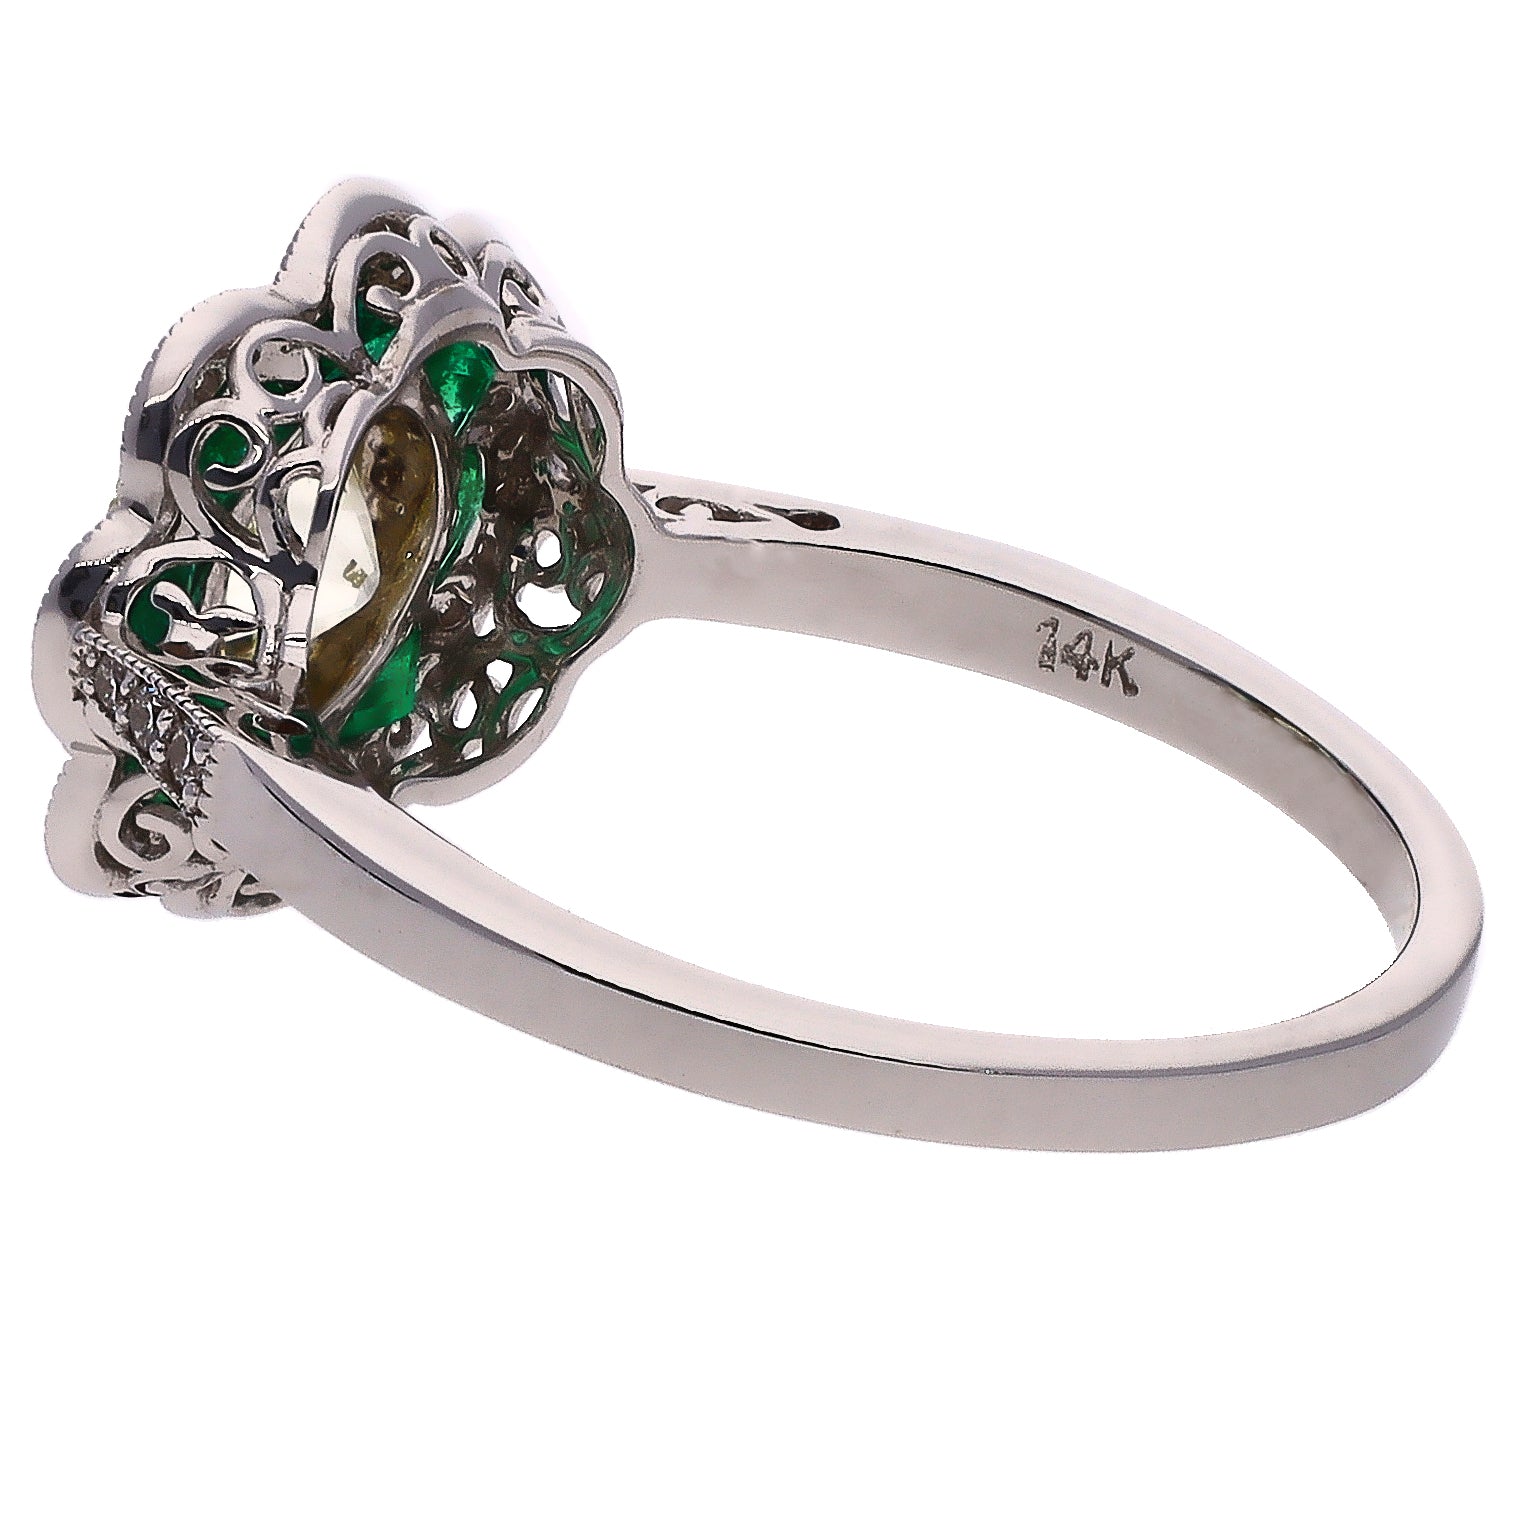 14K White Gold European Cut Diamond and Emerald Fashion Ring